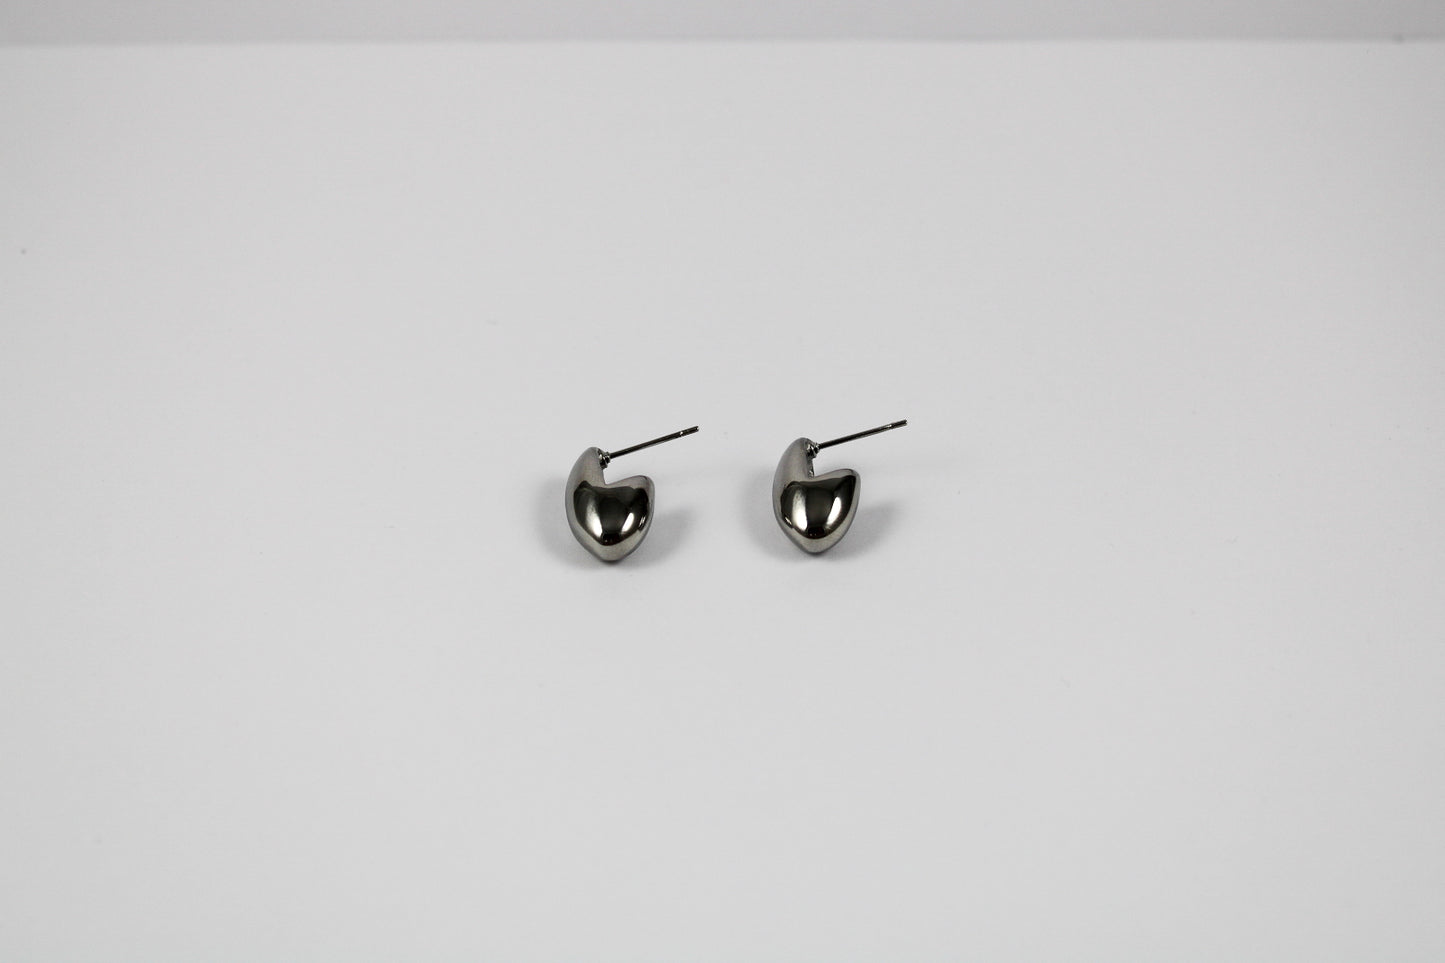 Macondo silver earrings